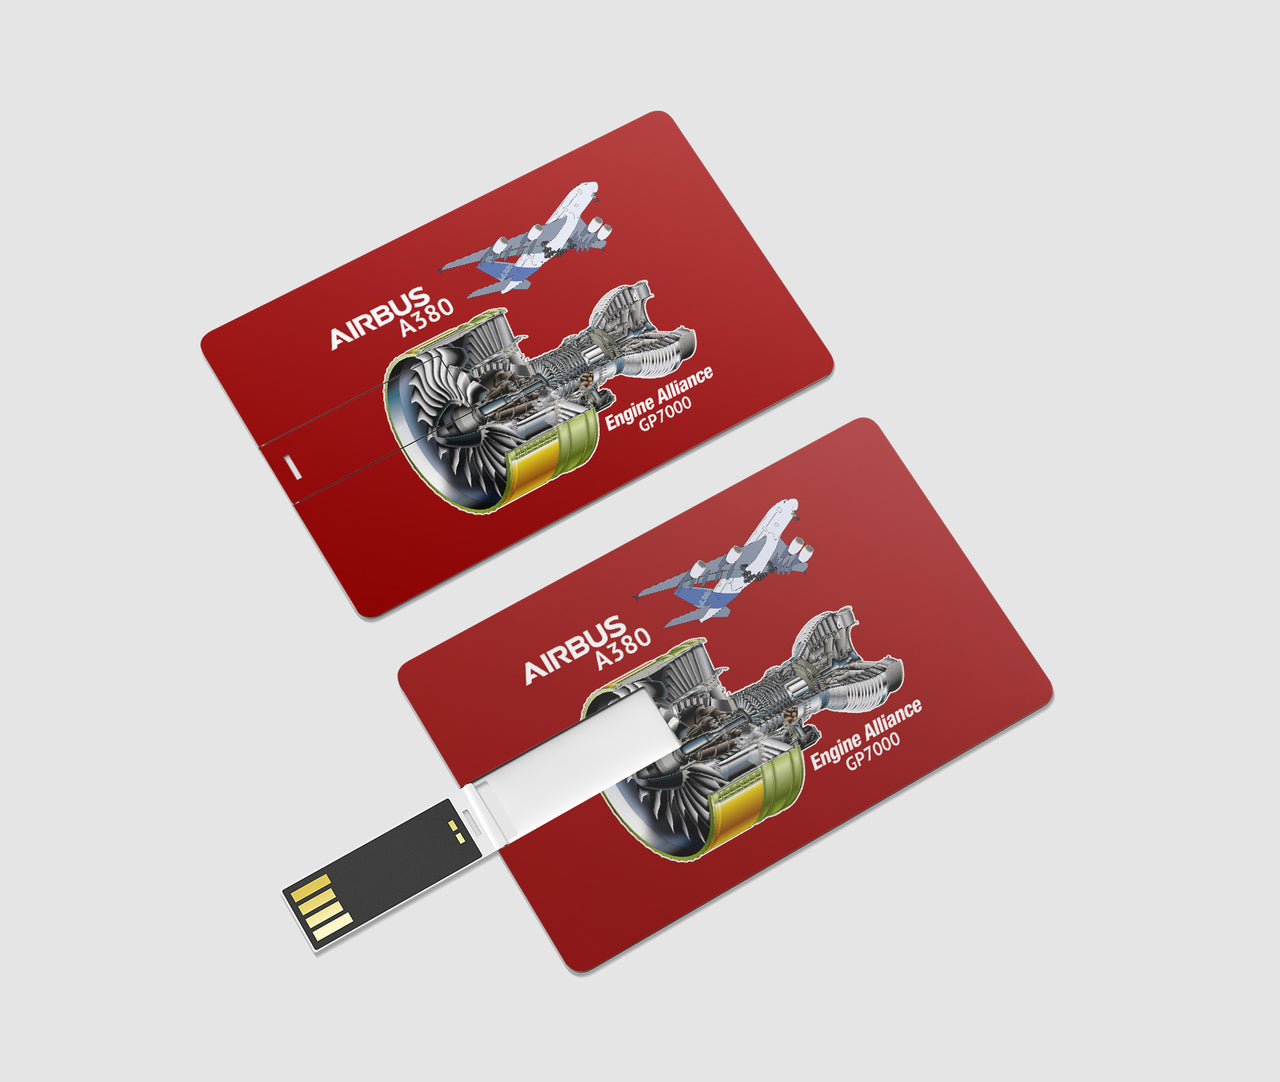 Airbus A380 & GP7000 Engine Designed USB Cards